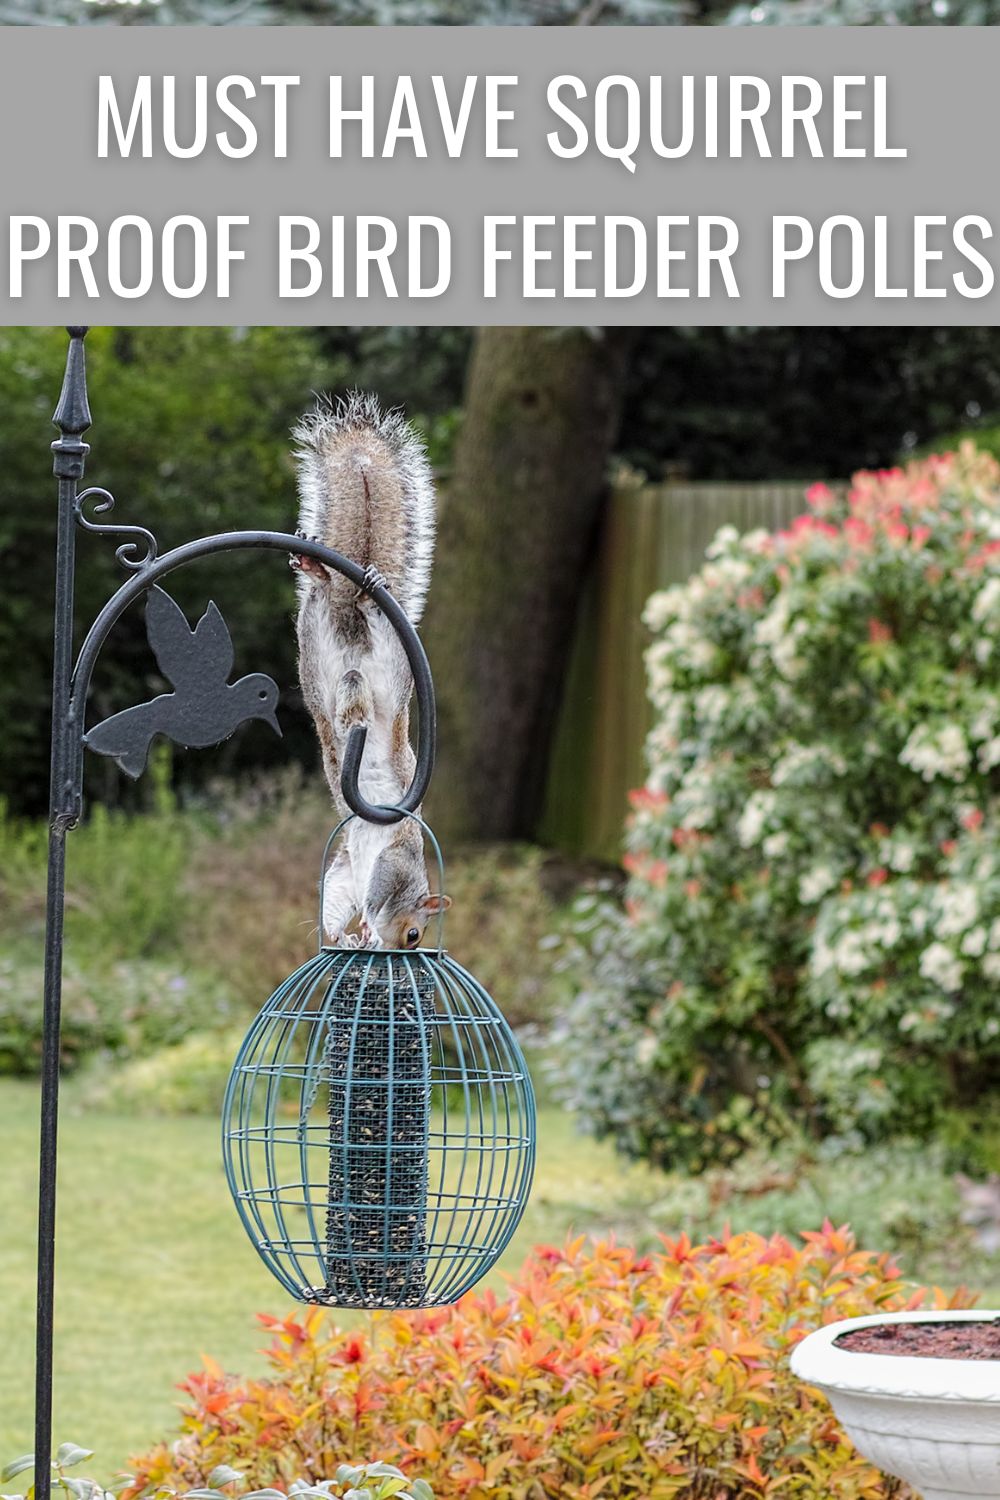 Must have squirrel proof bird feeder poles.